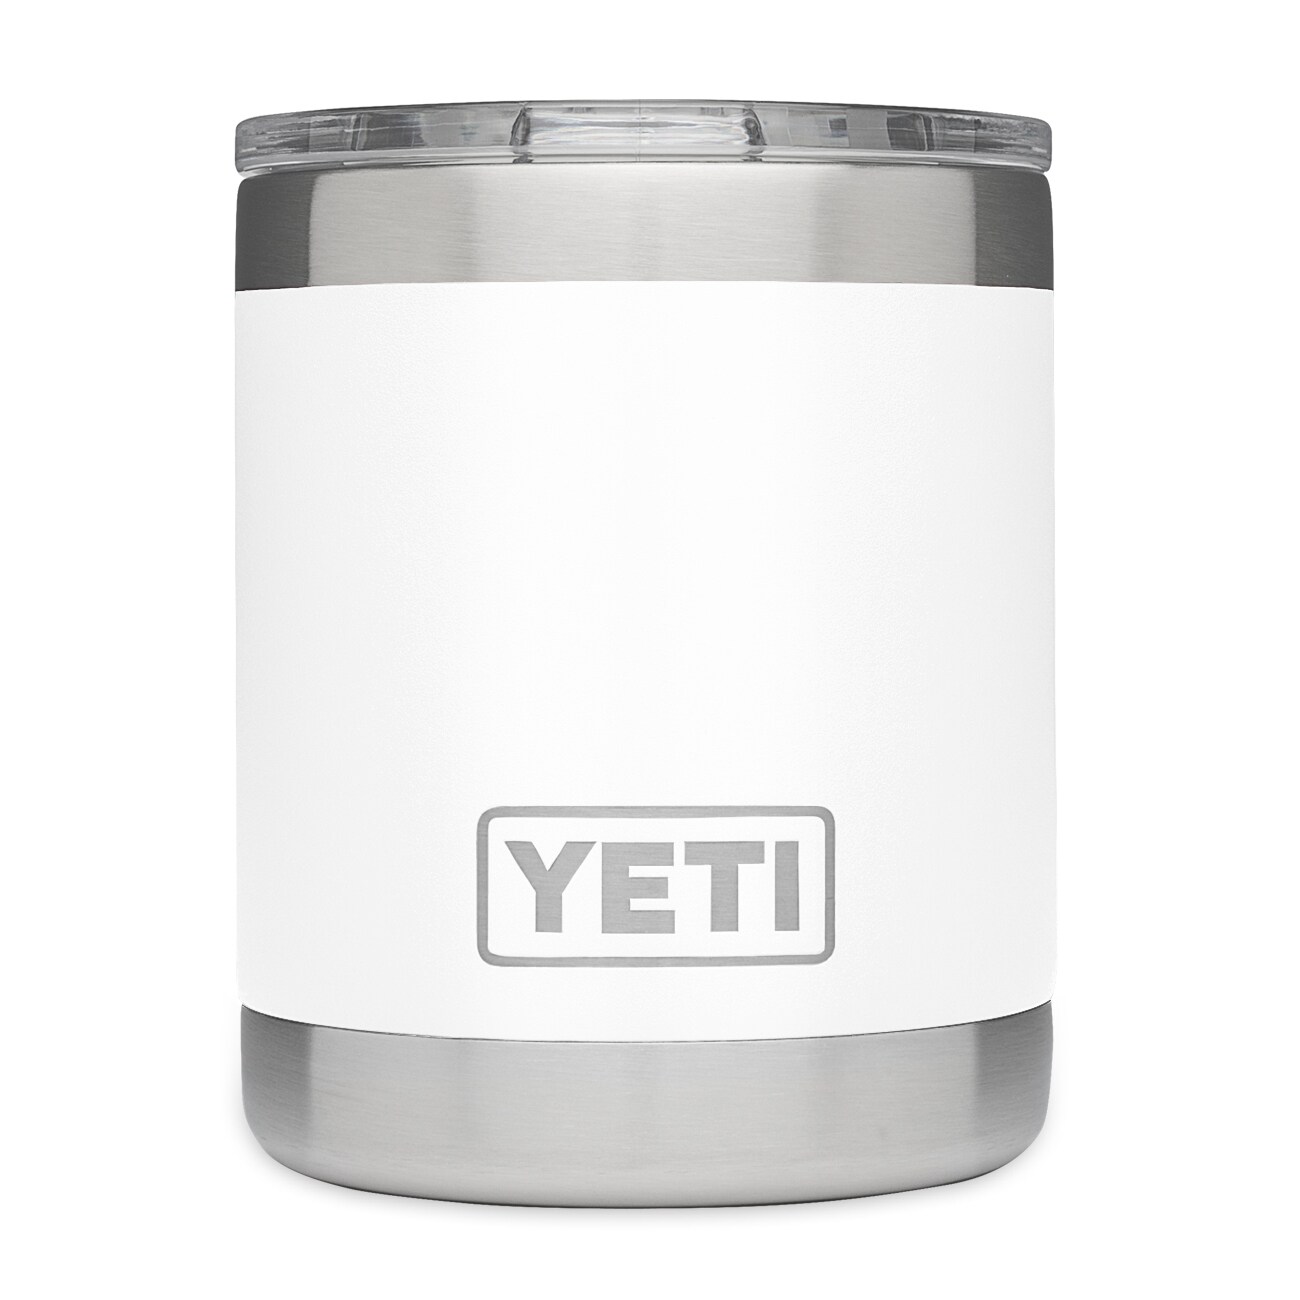 Cupholder for Yeti 24oz Coffee Mug or 10oz Lowball (Mug not included) Model  93 